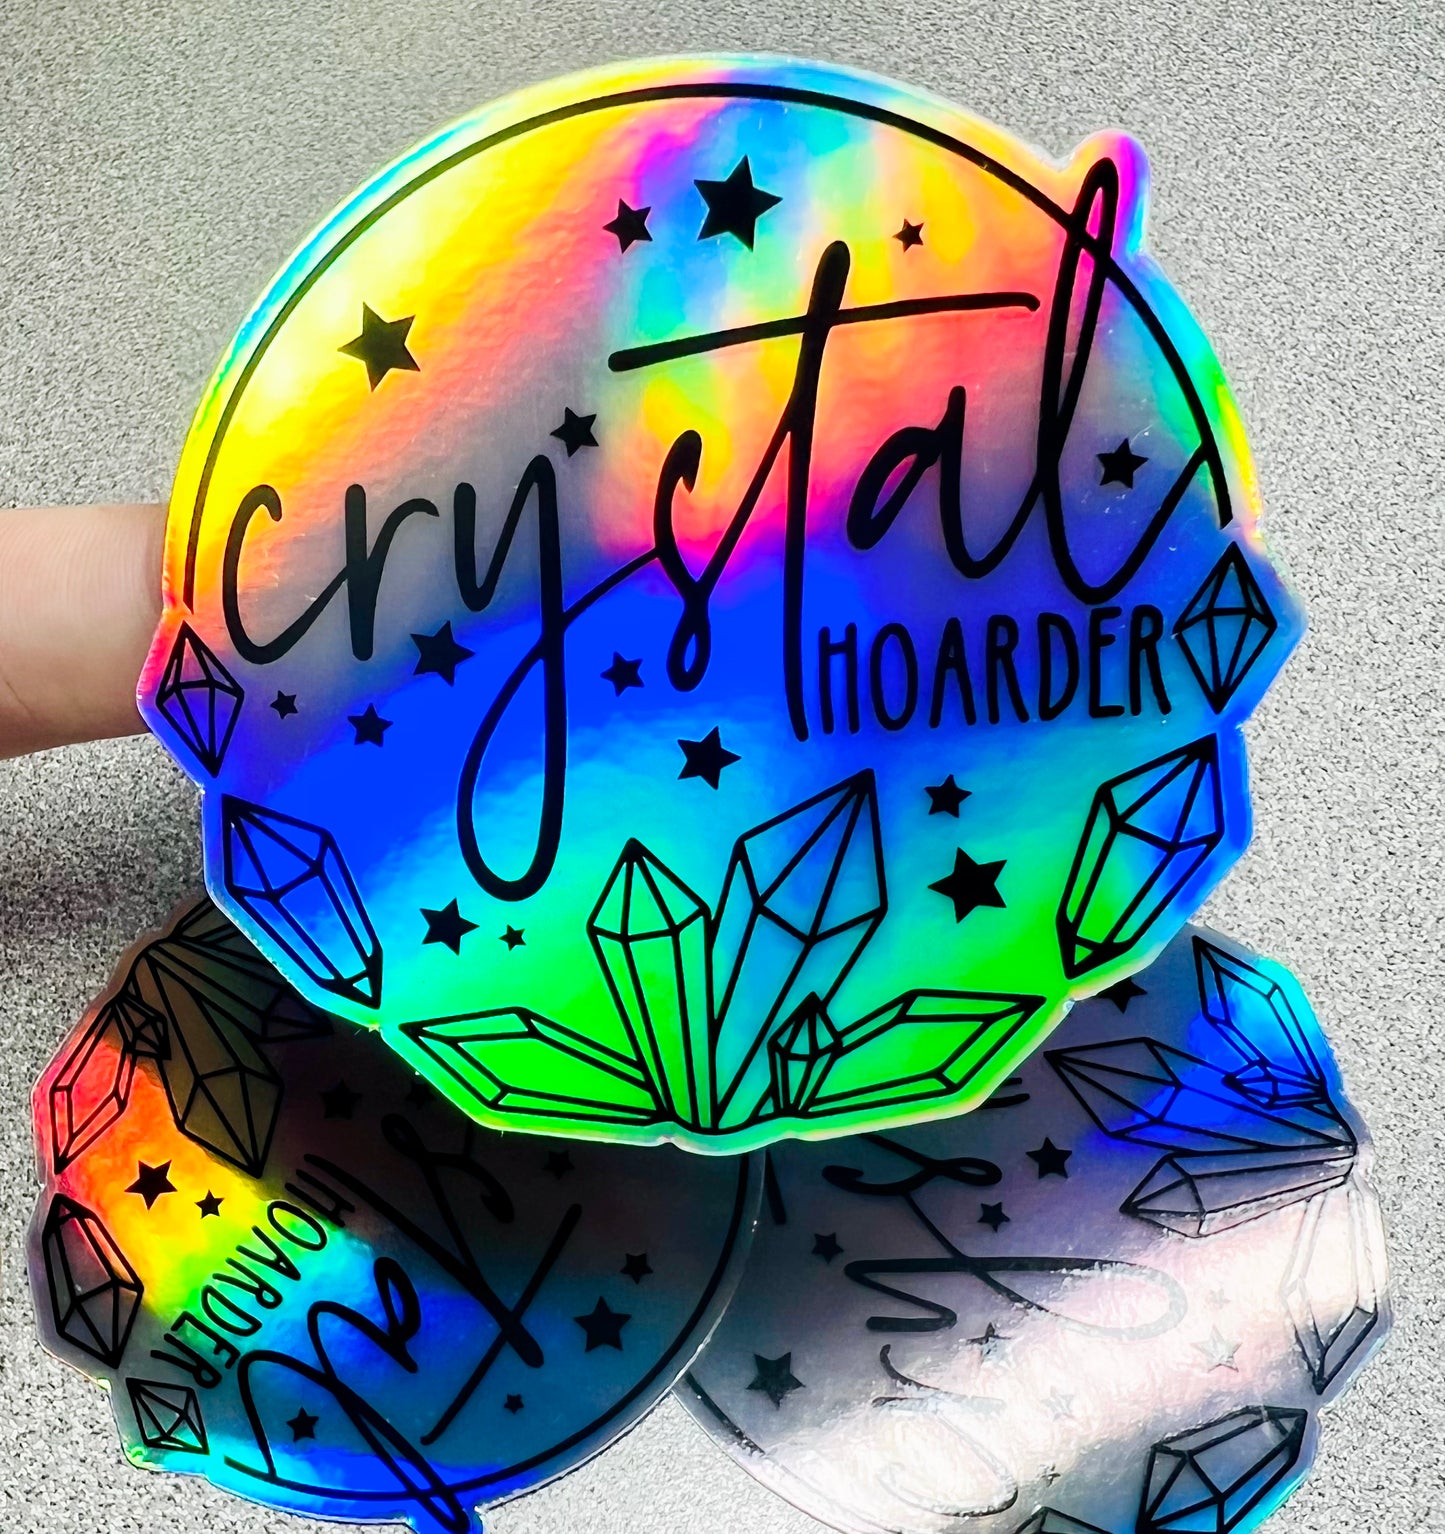 WATERPROOF Crystal Hoarder Vinyl Sticker - Full Holographic